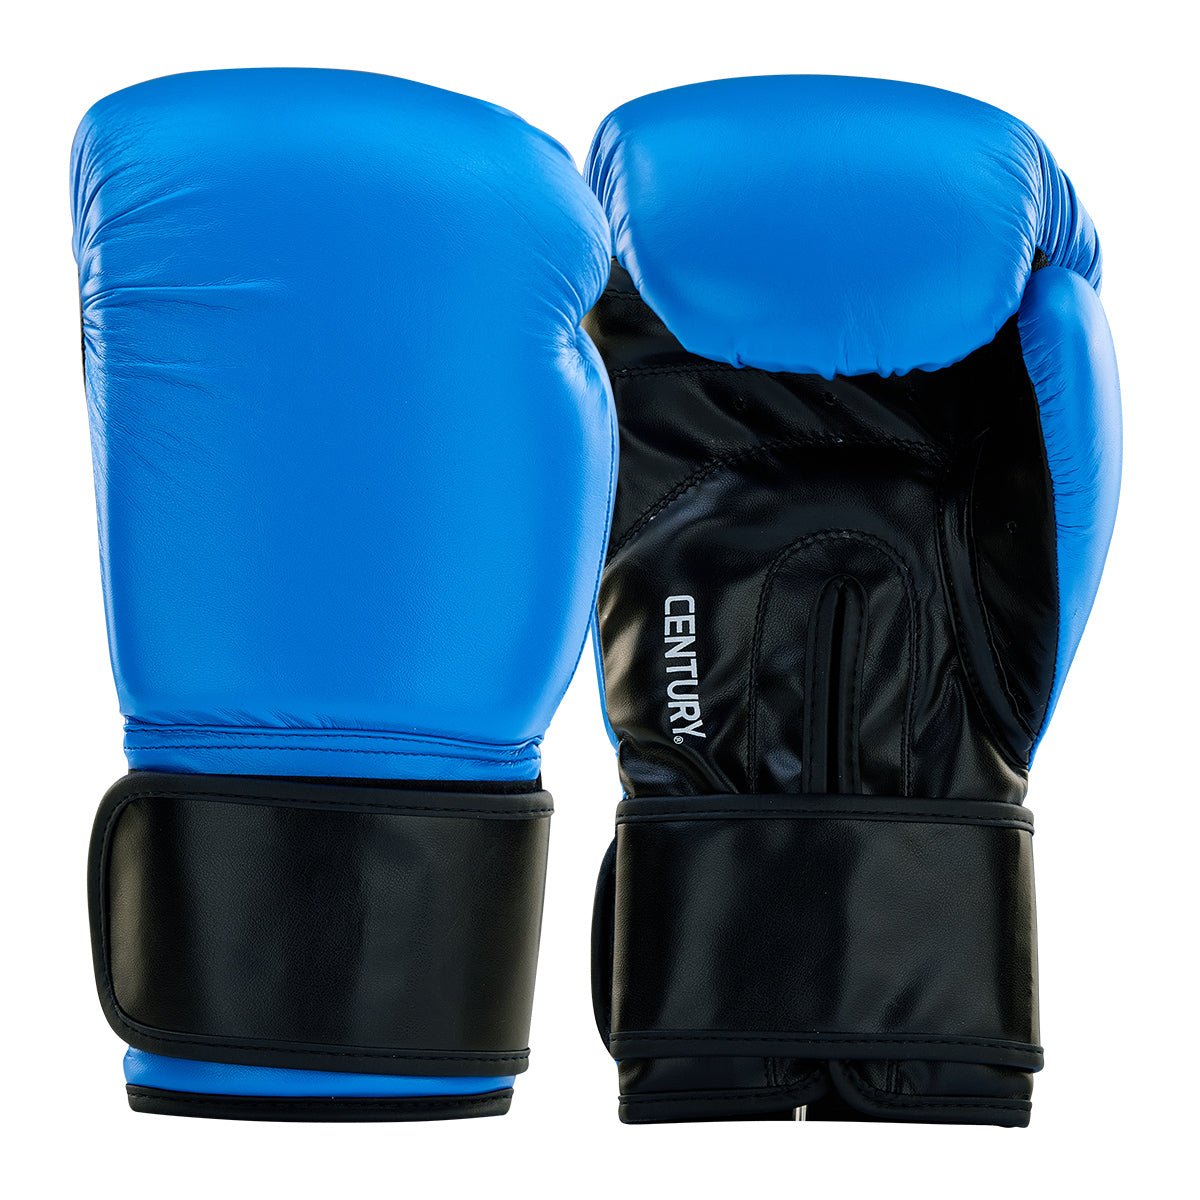 Century Solid Heavy Bag Glove 12 Oz. Blue